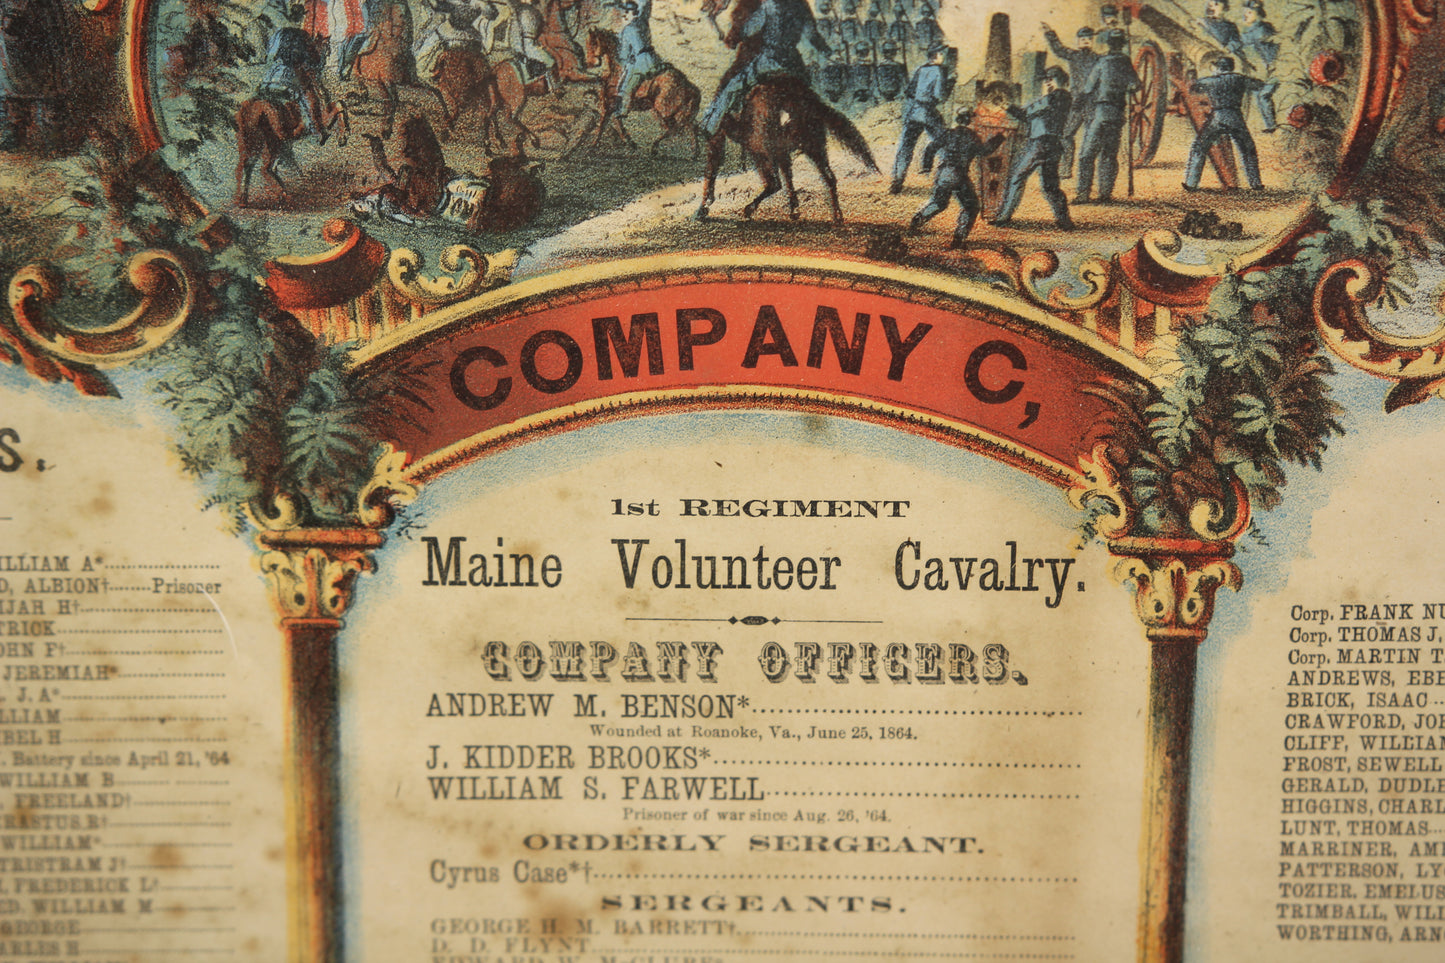 Civil War Military Register Lithograph - Company C, 1st Regiment Maine Volunteer Cavalry - 21.5" x 25.5"